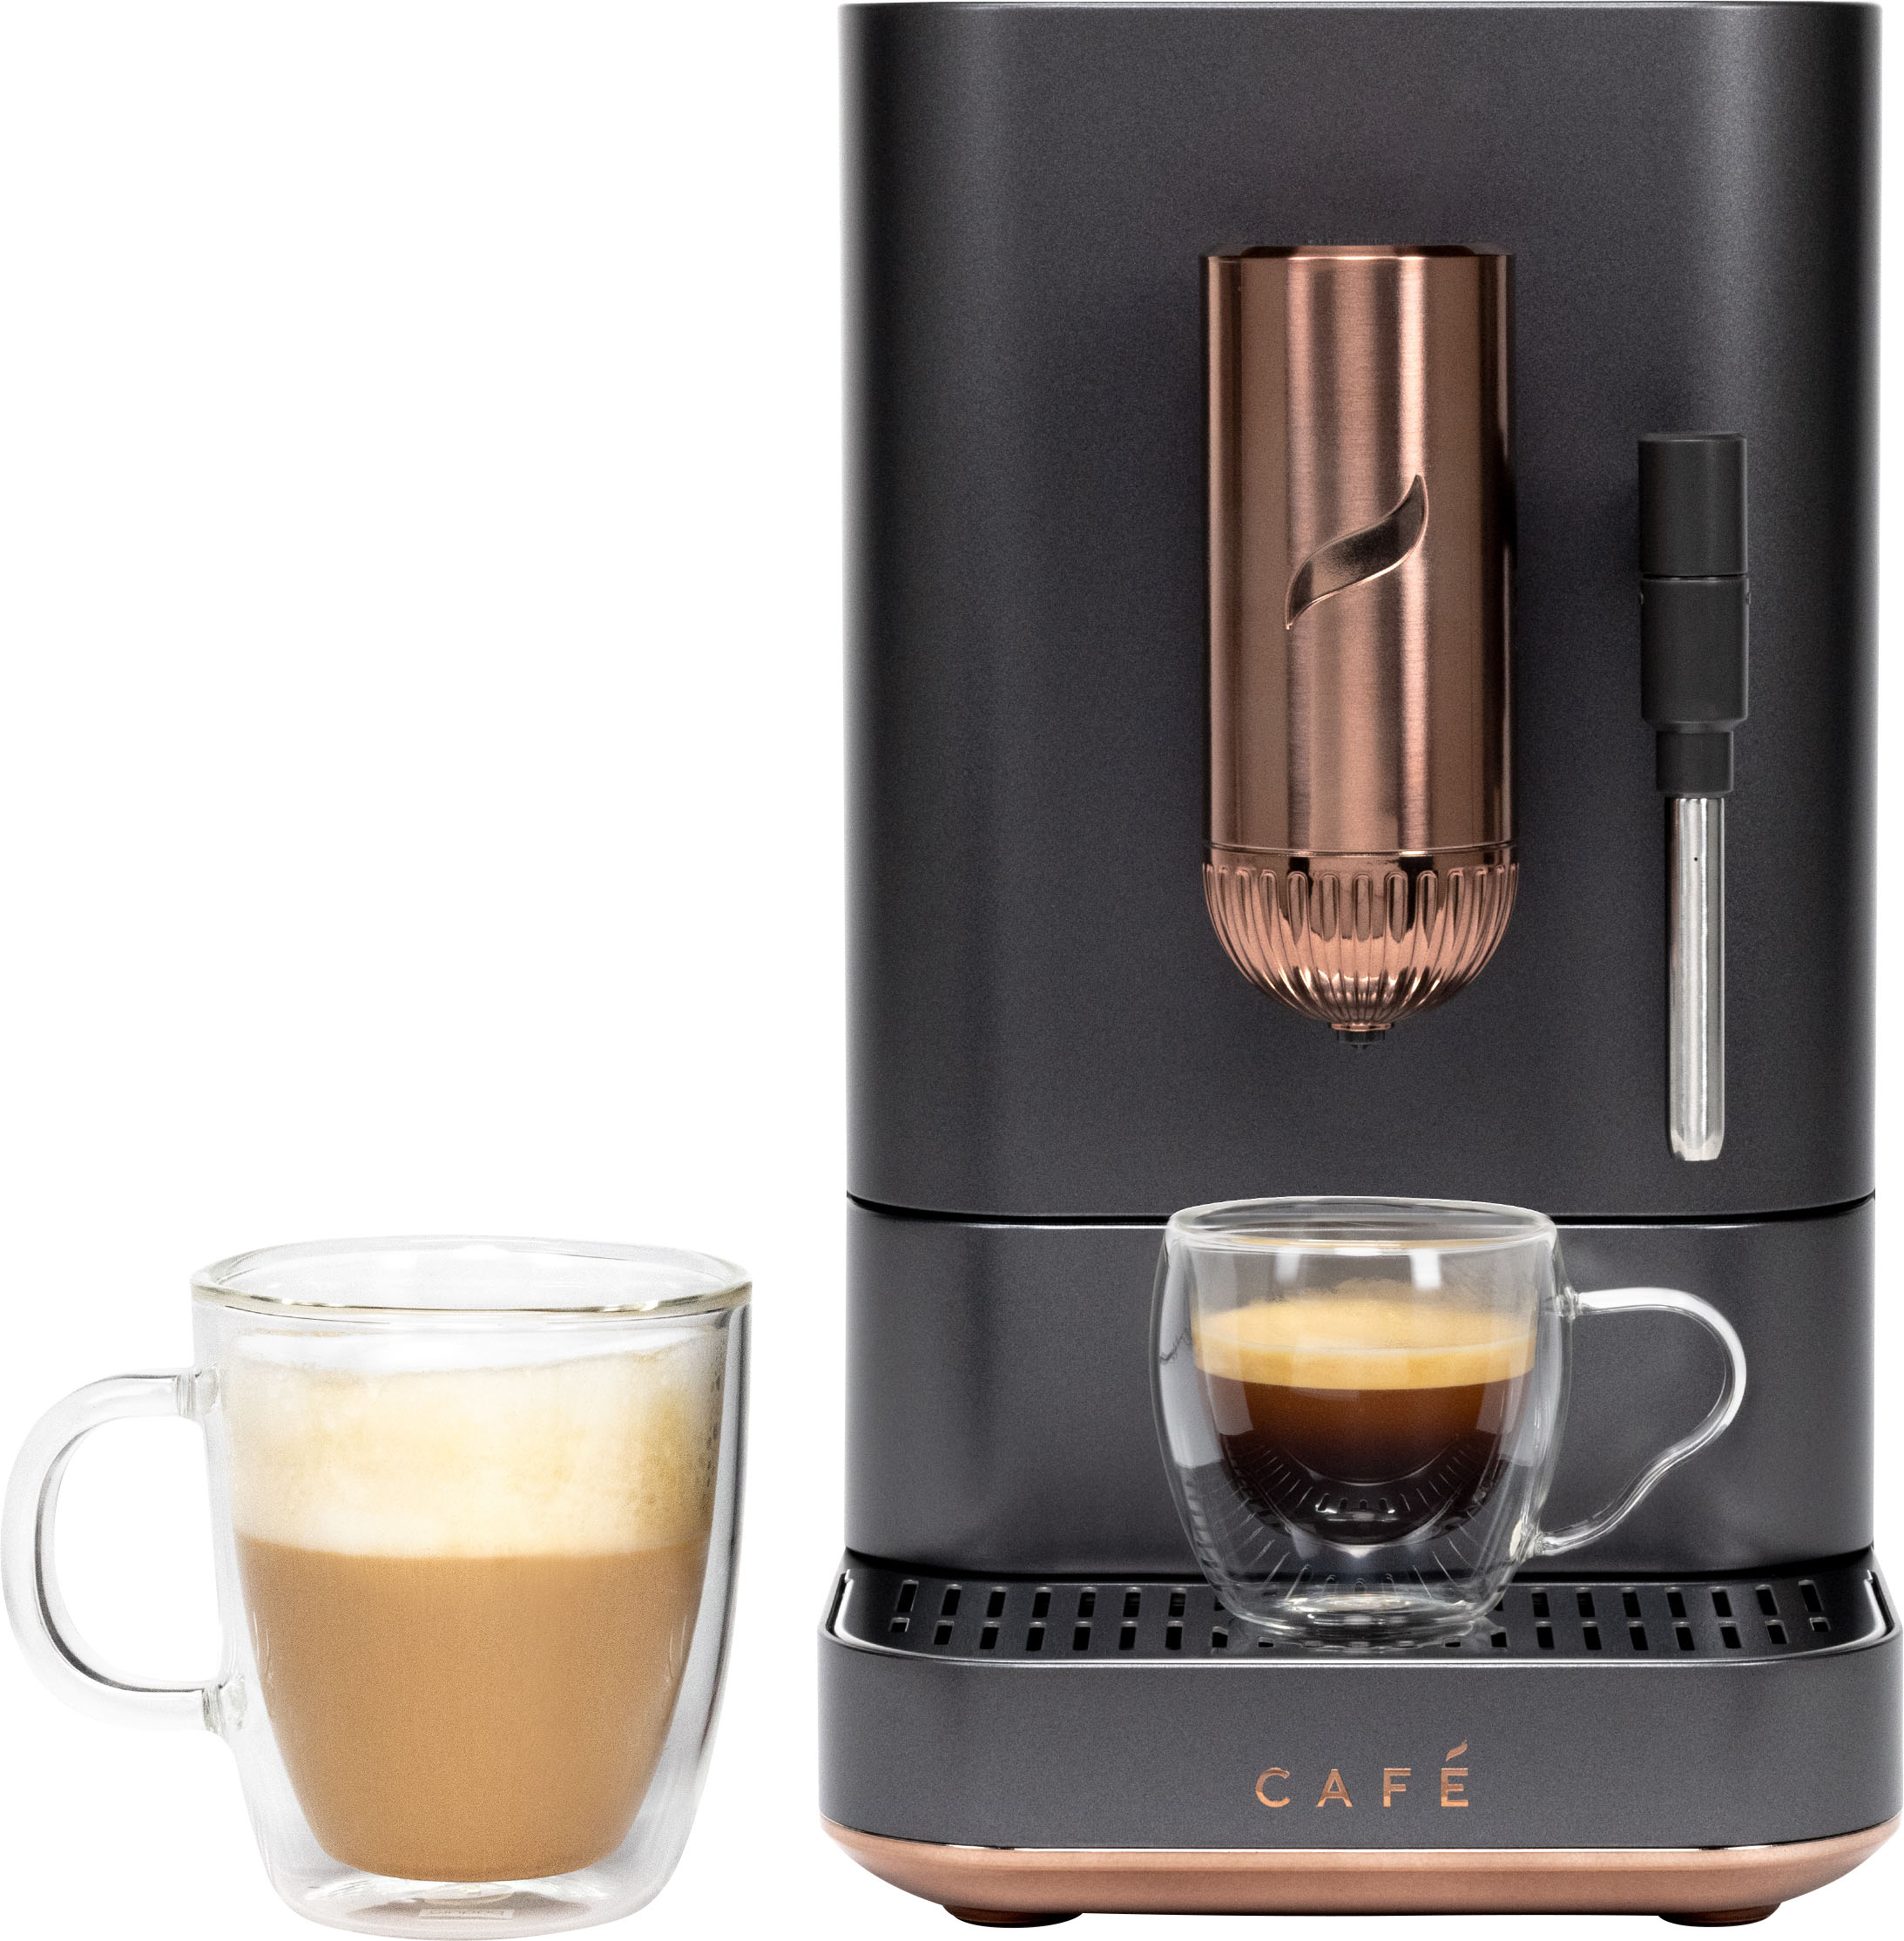 Nespresso: Espresso Machines & Coffee Makers - Best Buy